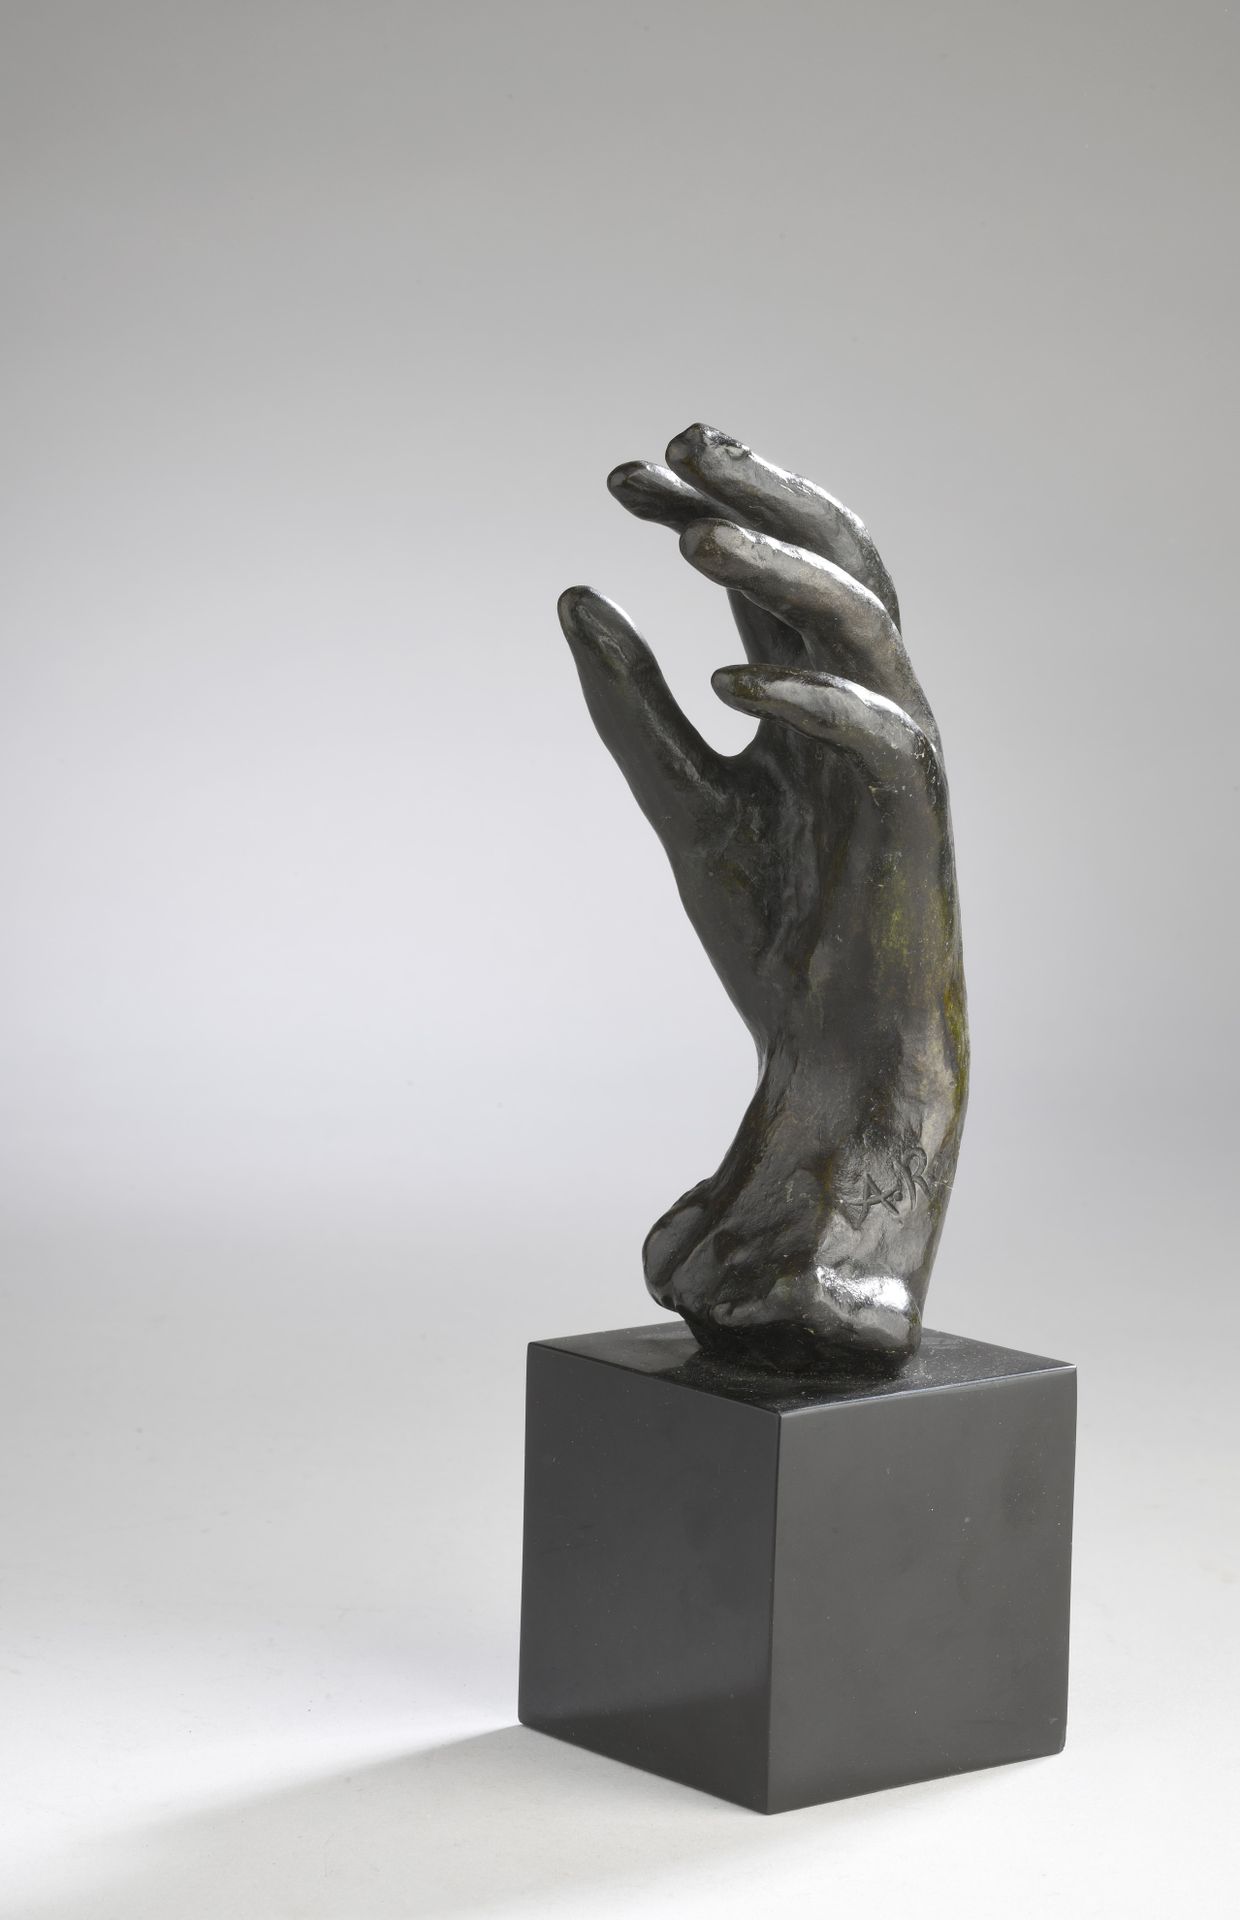 Null Auguste Rodin (1840-1917)
Linke Hand, genannt Nr. 35
Circa 1966
Original Br&hellip;